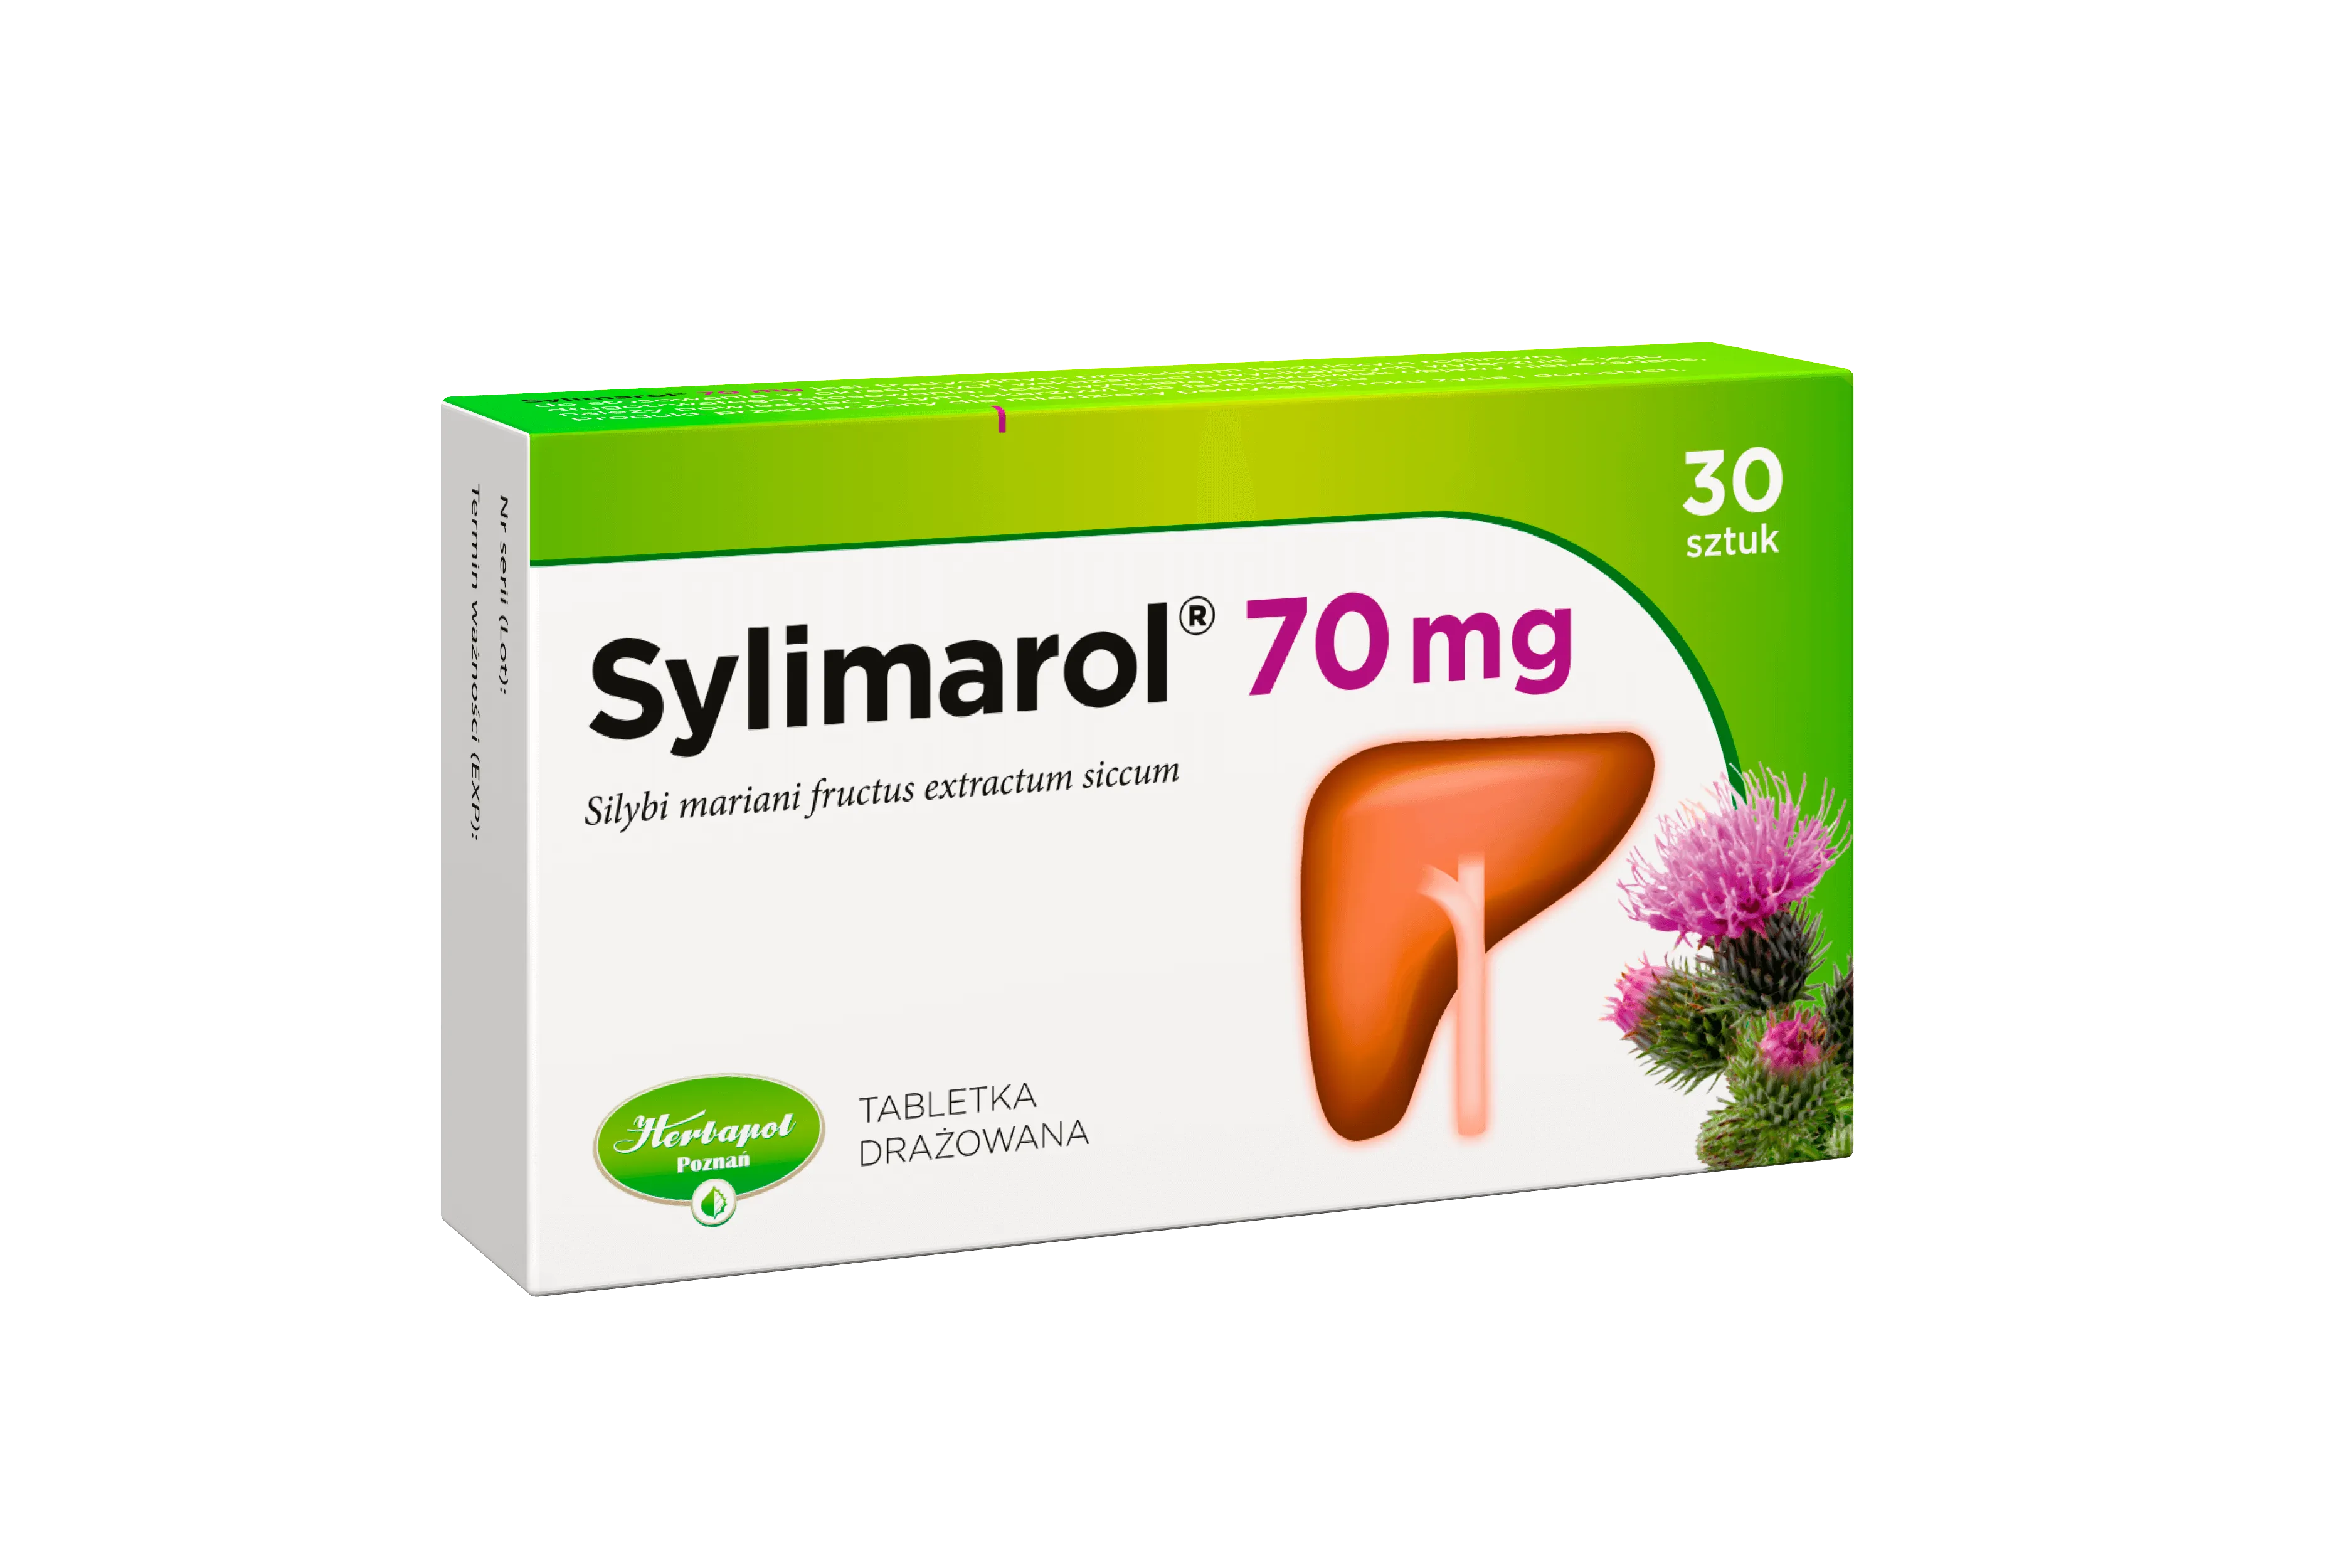 Sylimarol, 70 mg, 30 tabletek drażowanych